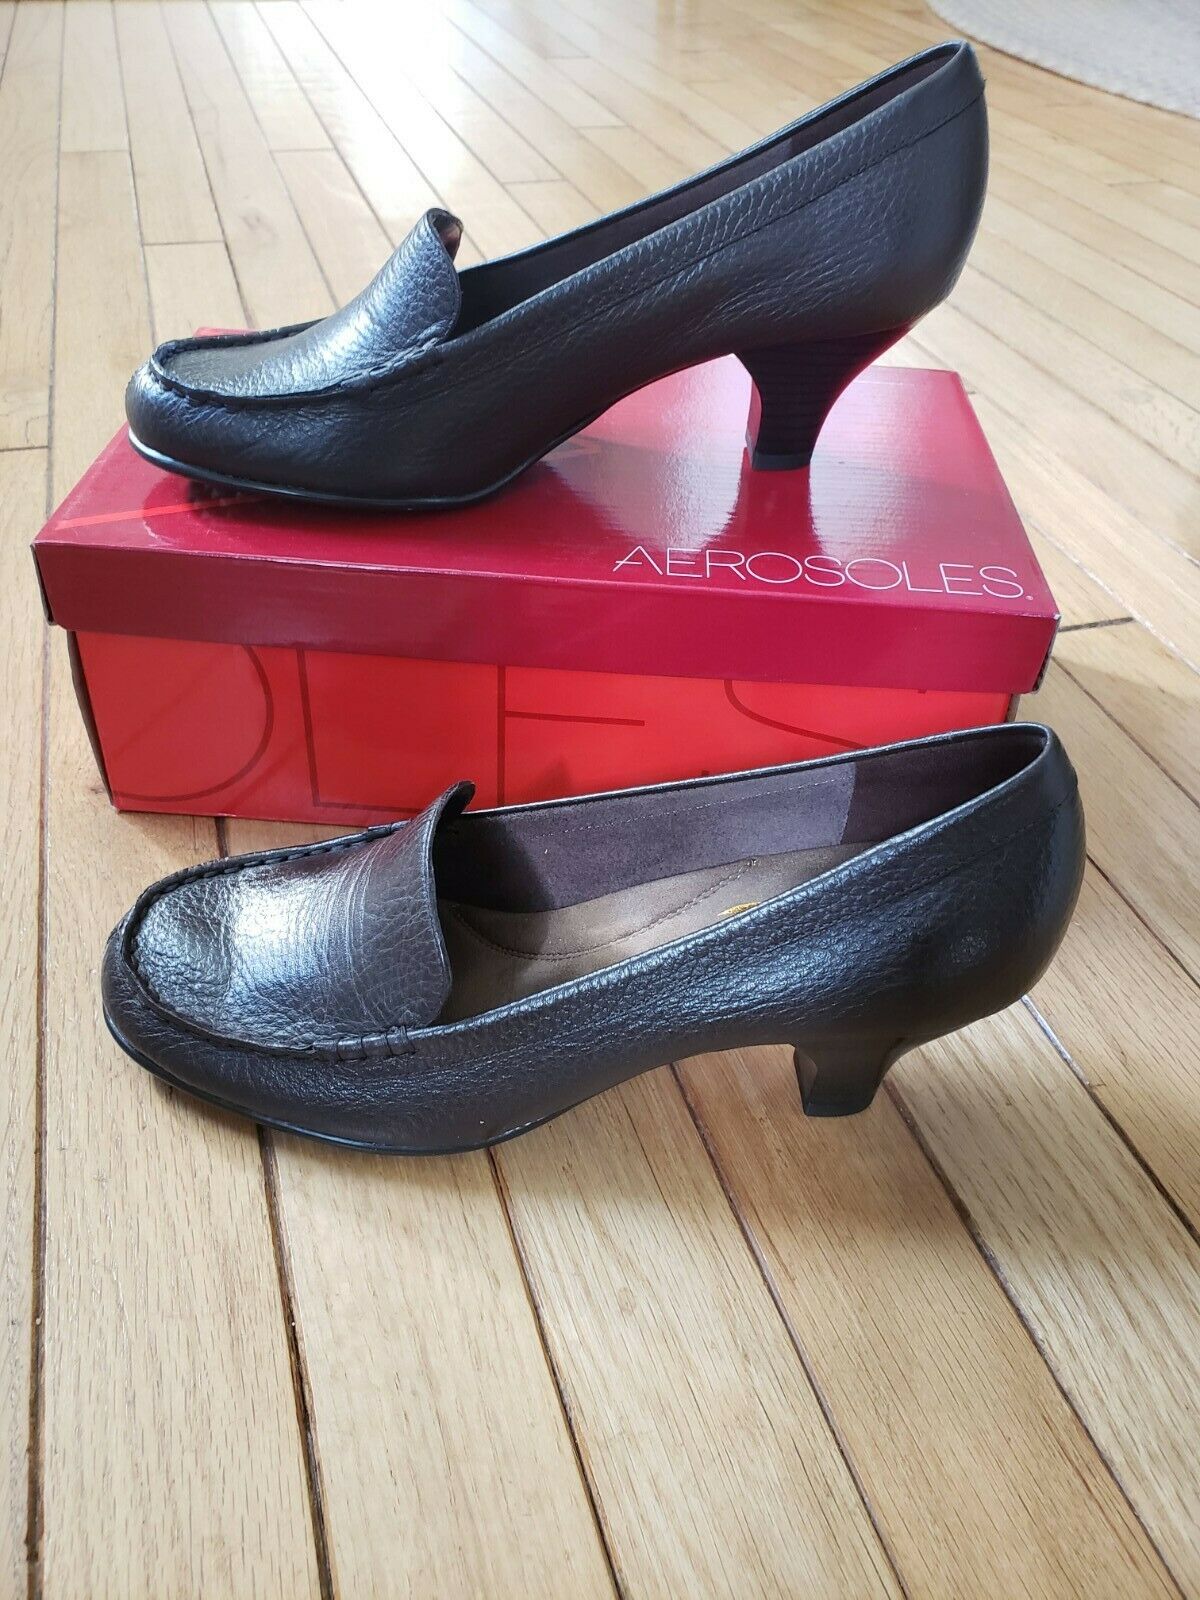 AEROSOLES loafer style pump dress shoes